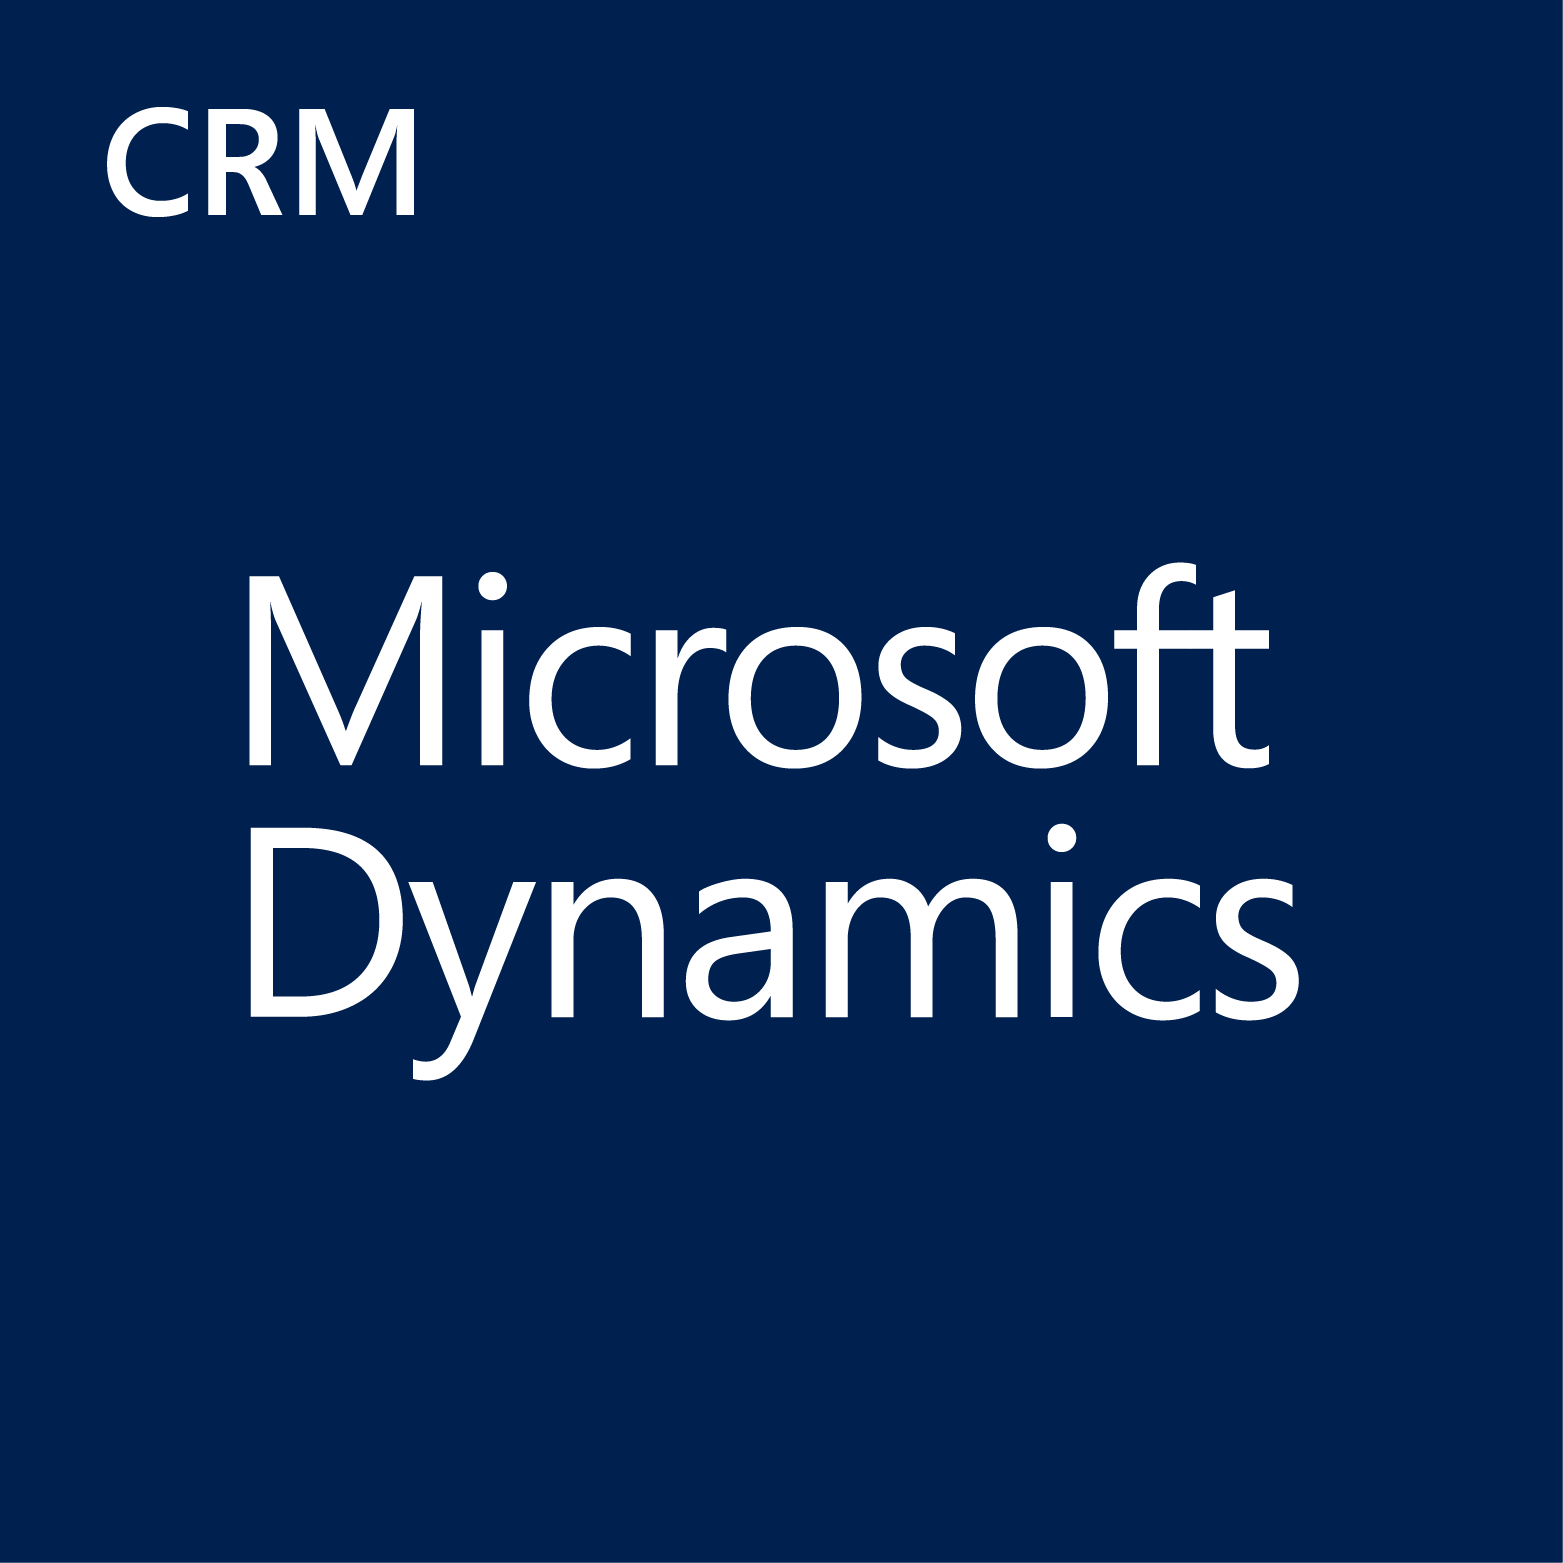 Microsoft Dynamics CRM 2013 Logo - Microsoft Dynamics CRM | Corporate Renaissance Group